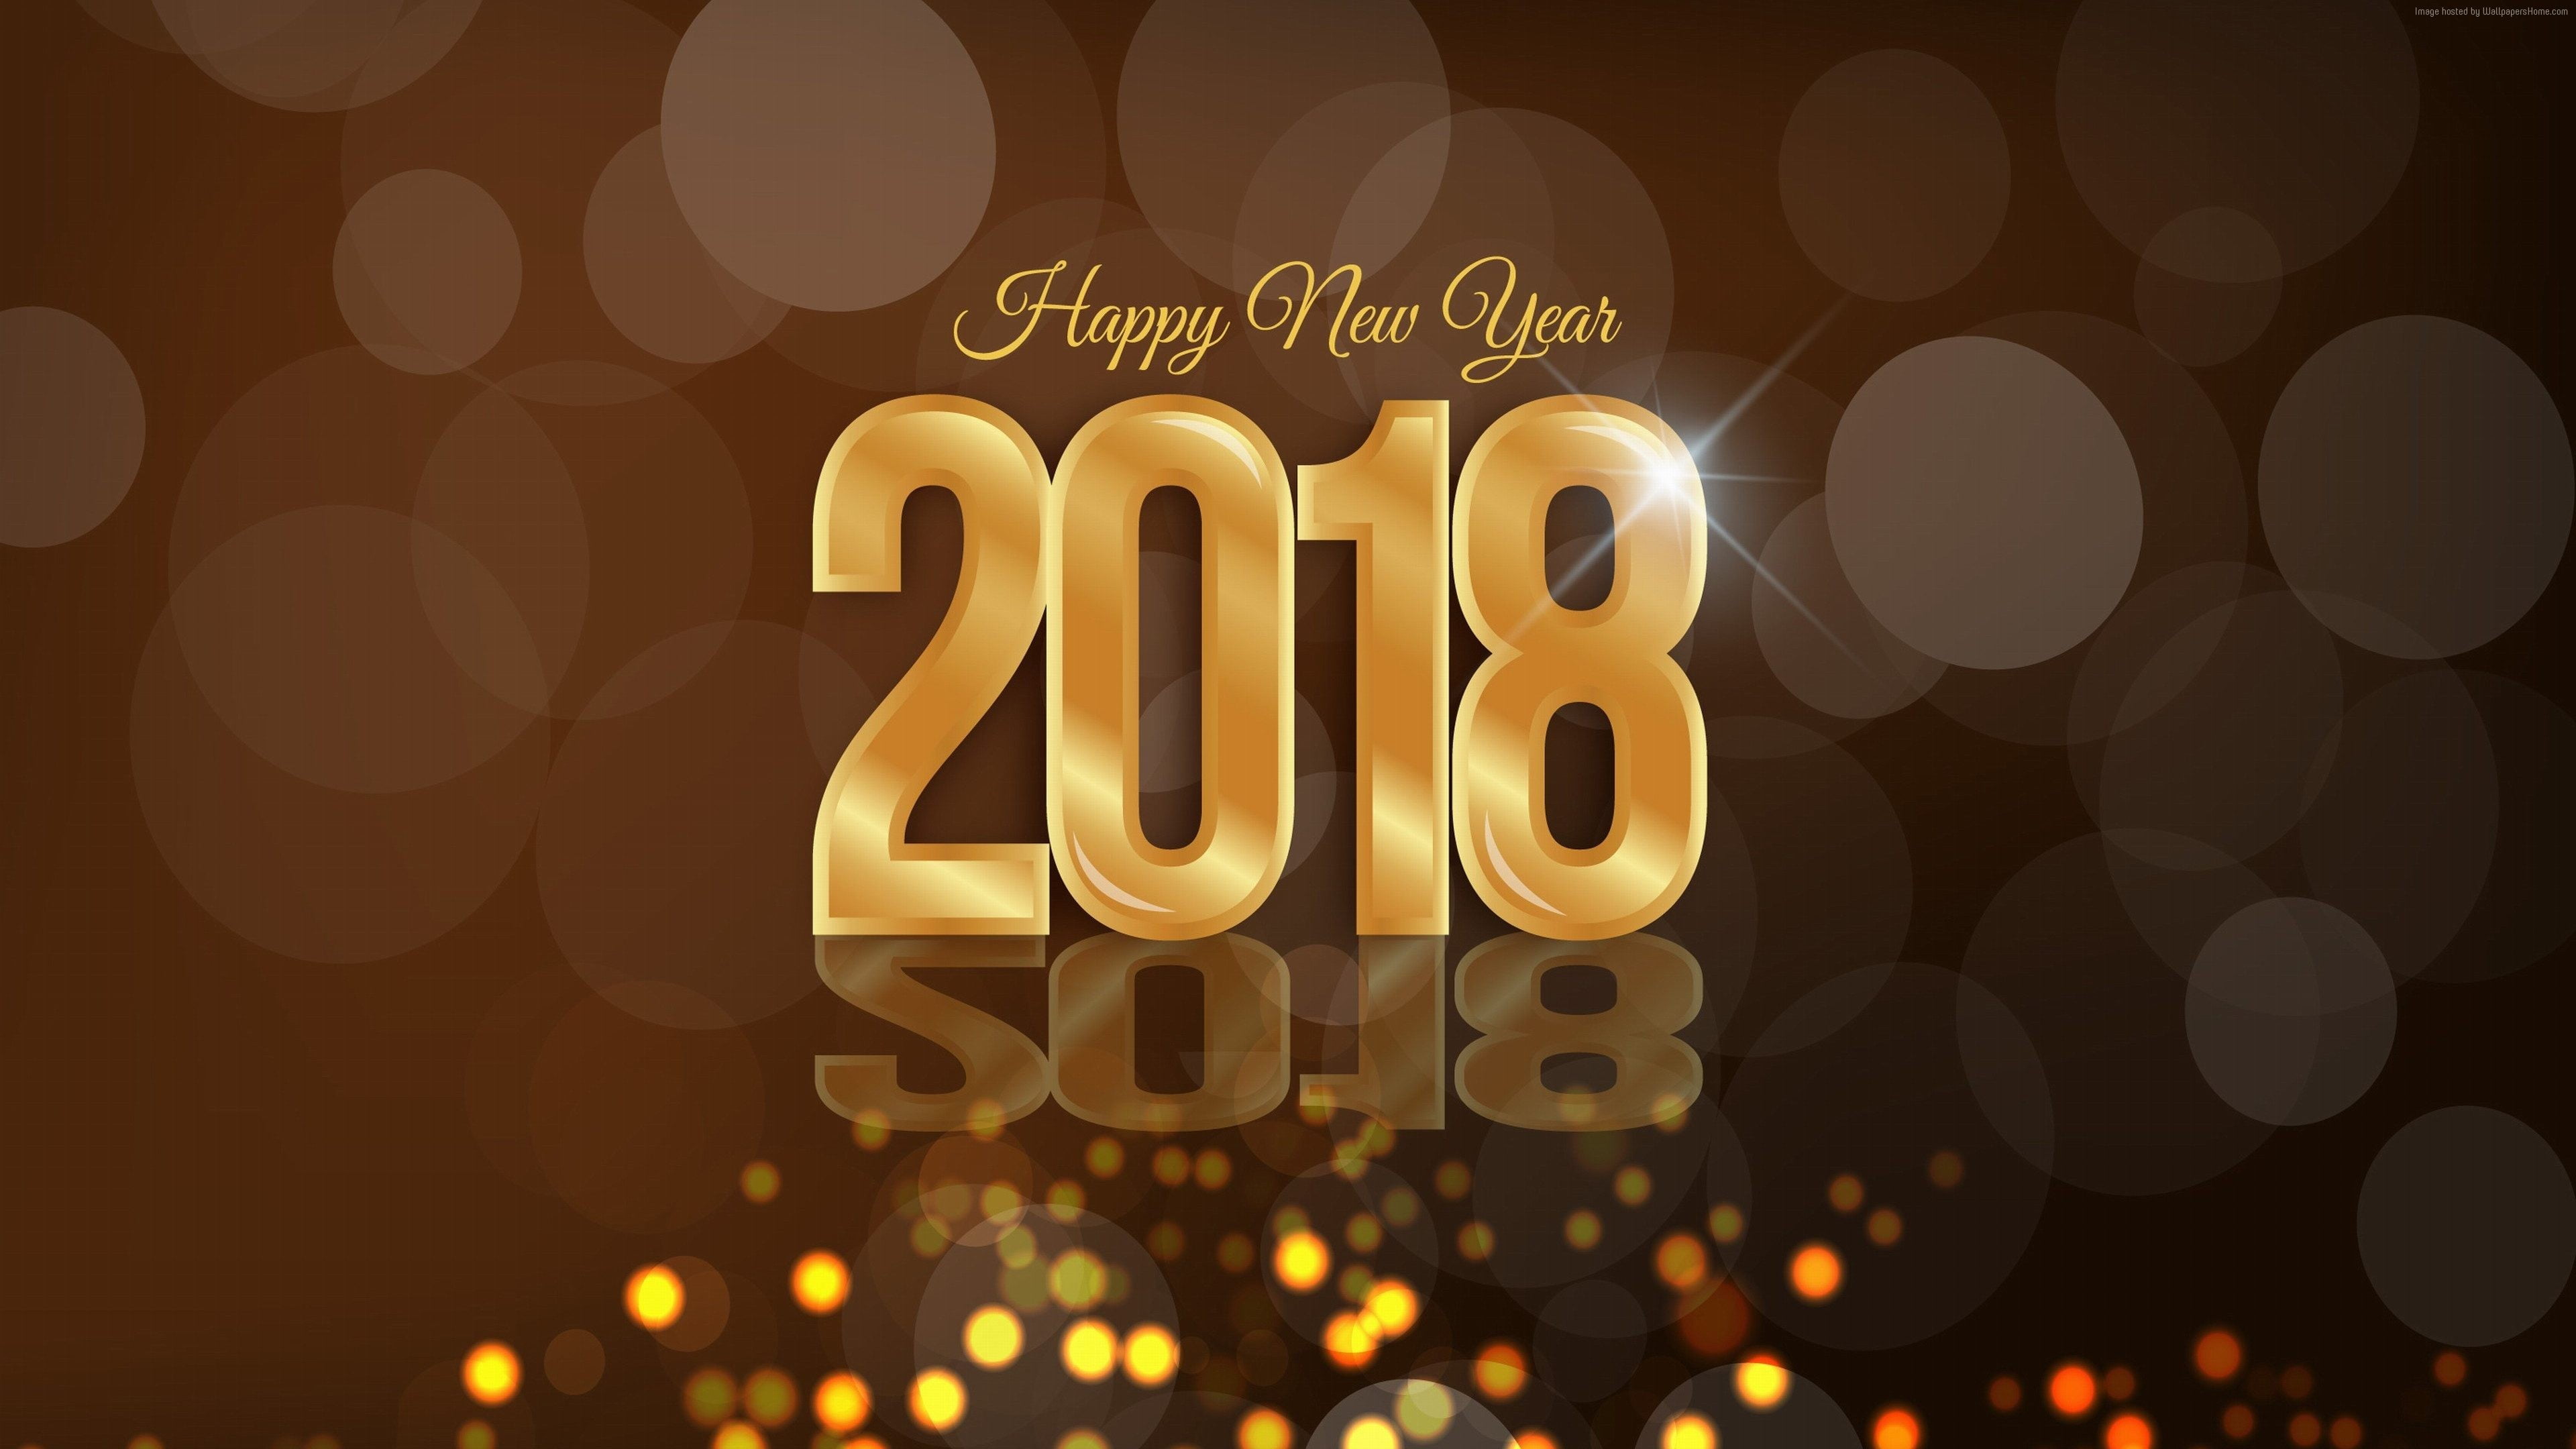 Happy New Year 2018 greeting